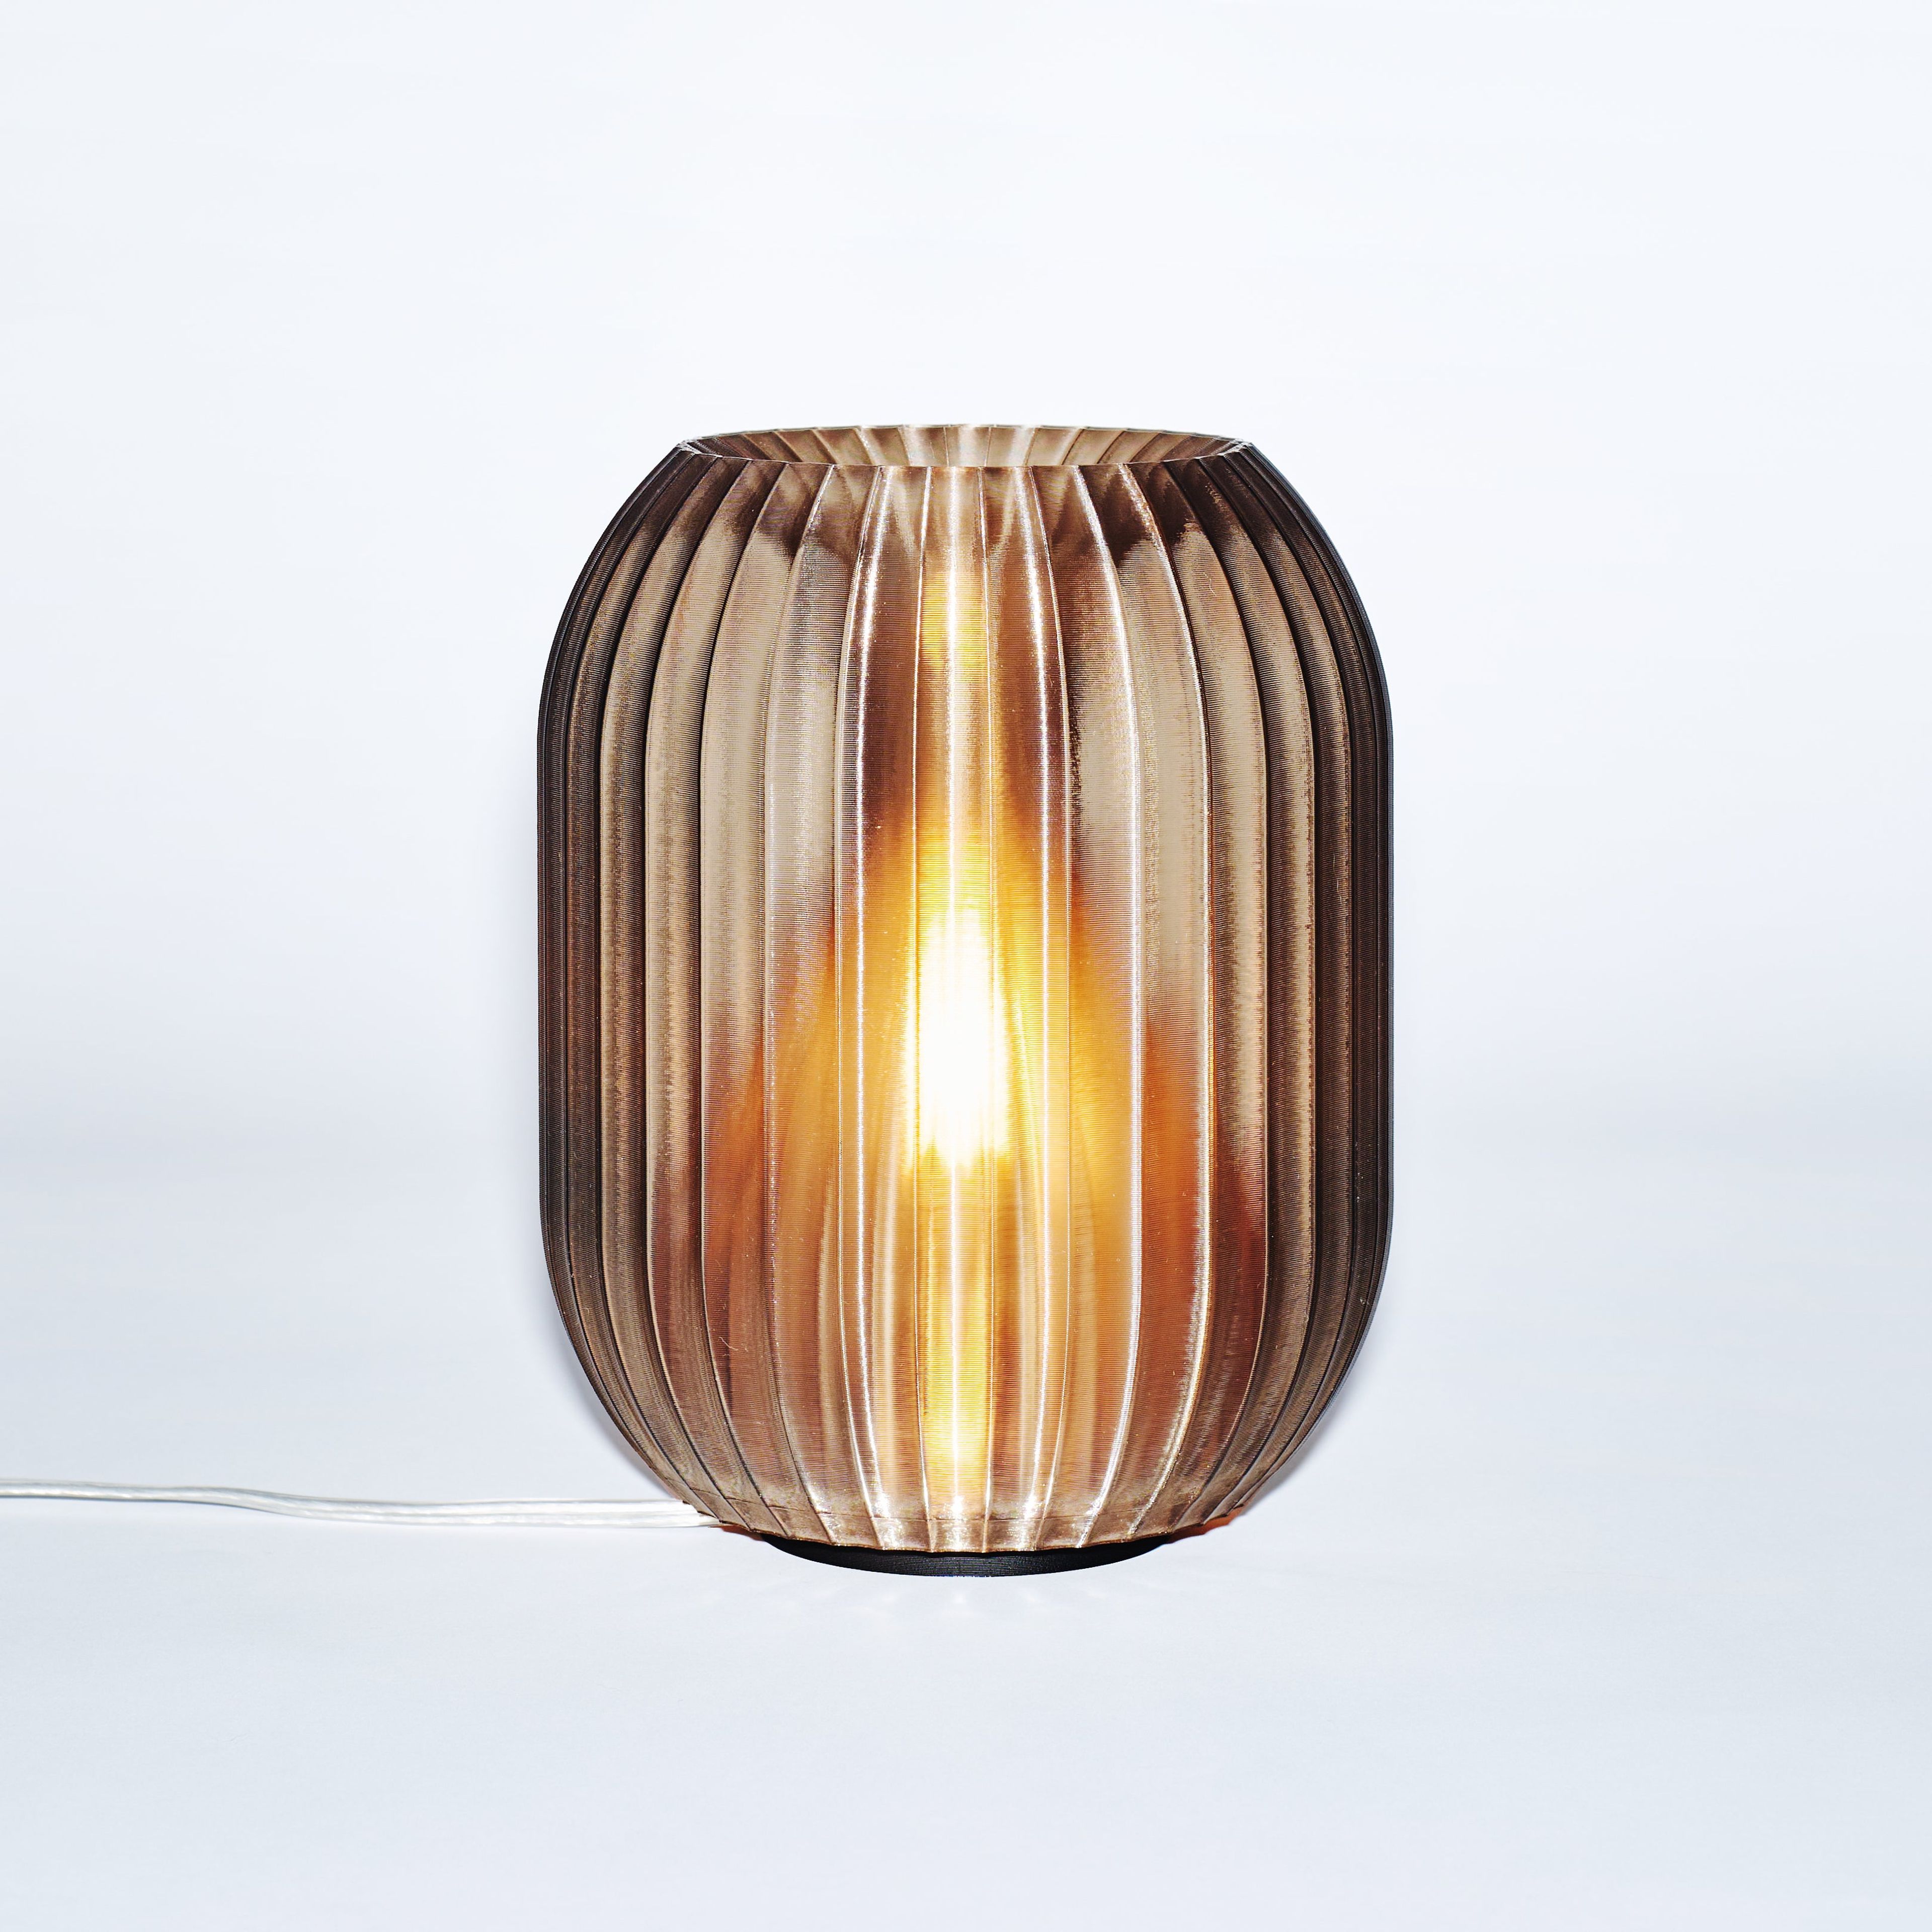 Allium Lamp x Christopher Merchant